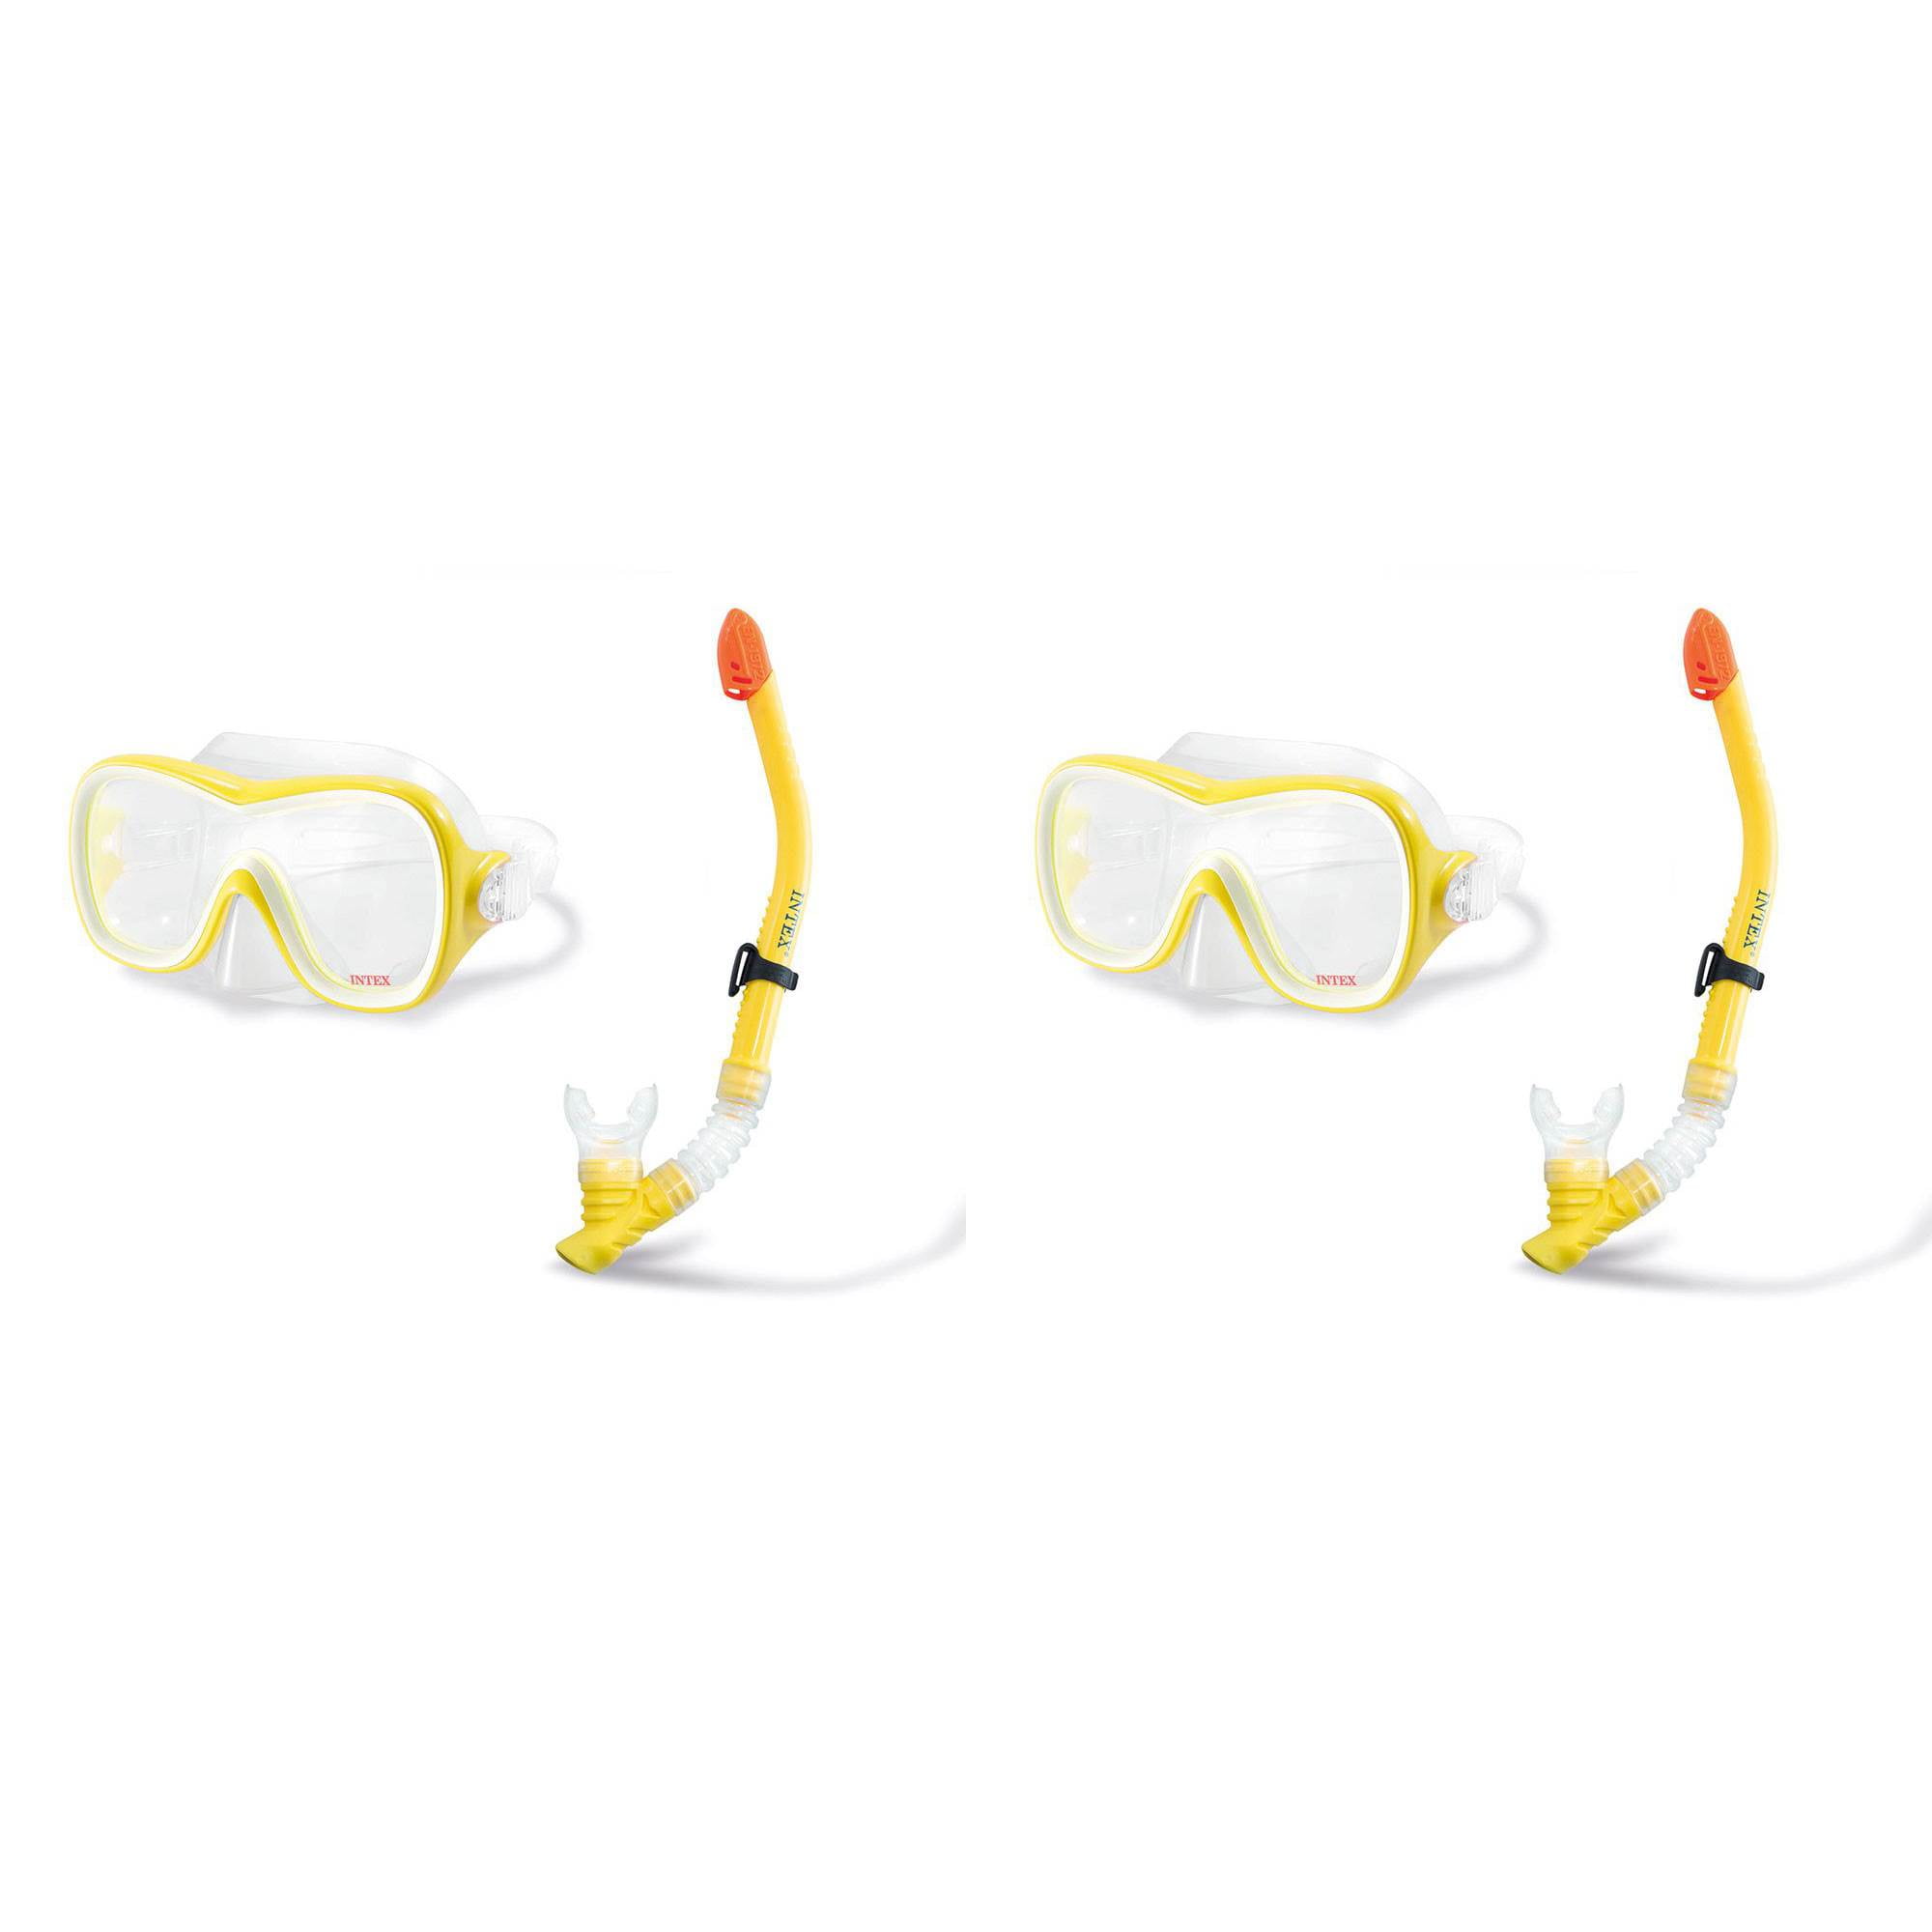 Intex Reef Rider Mask Aquaflow Sport Soft Comfortable Dive Swim Underwater Mask 